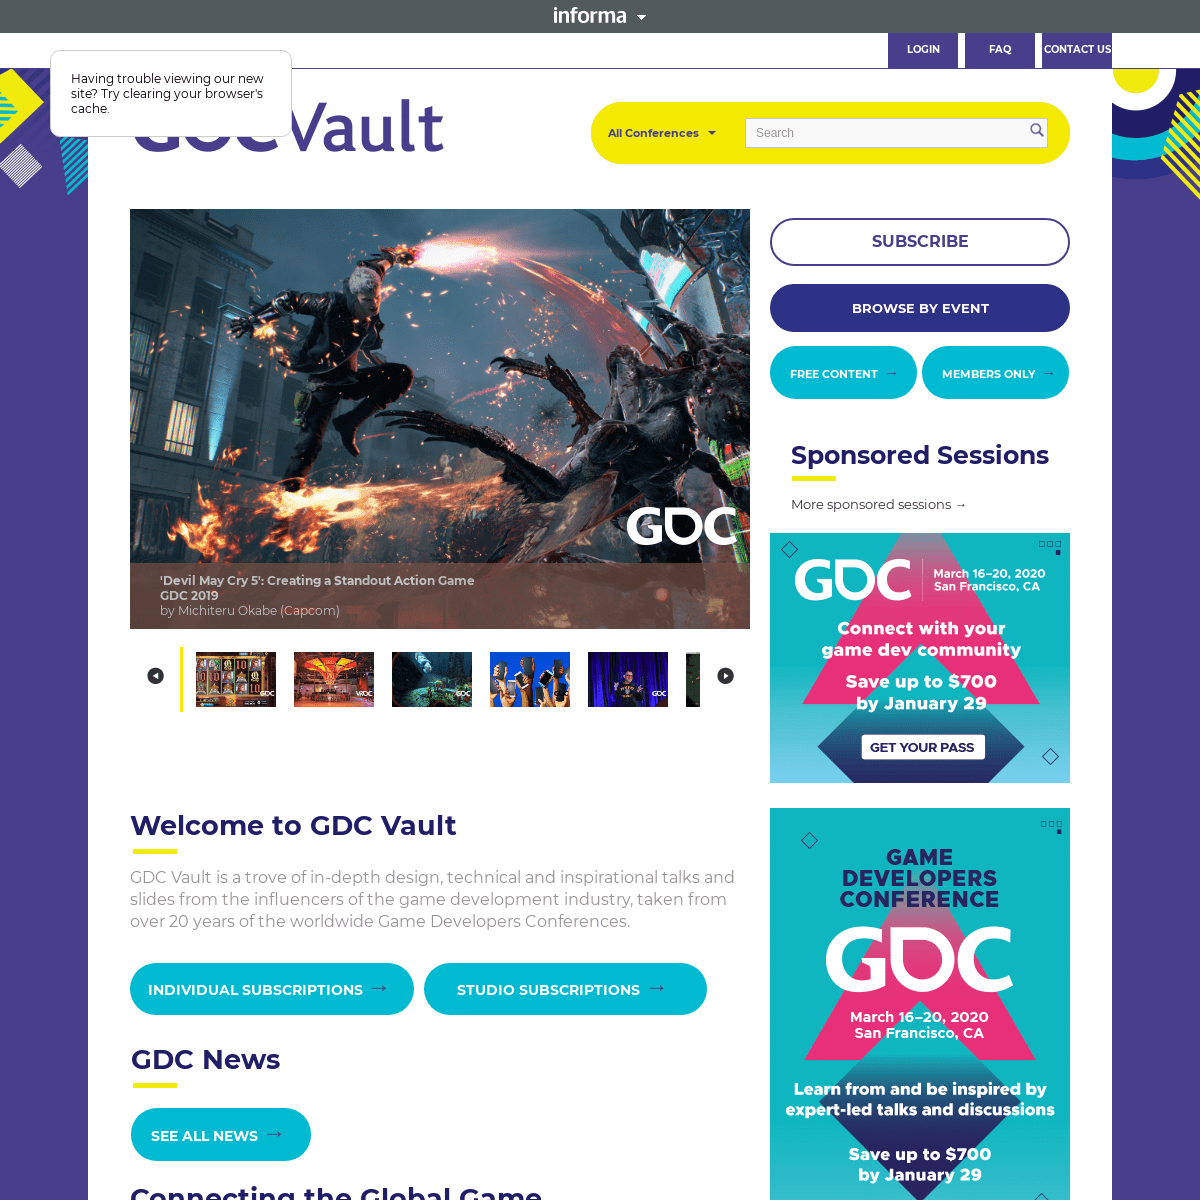 A complete backup of gdcvault.com